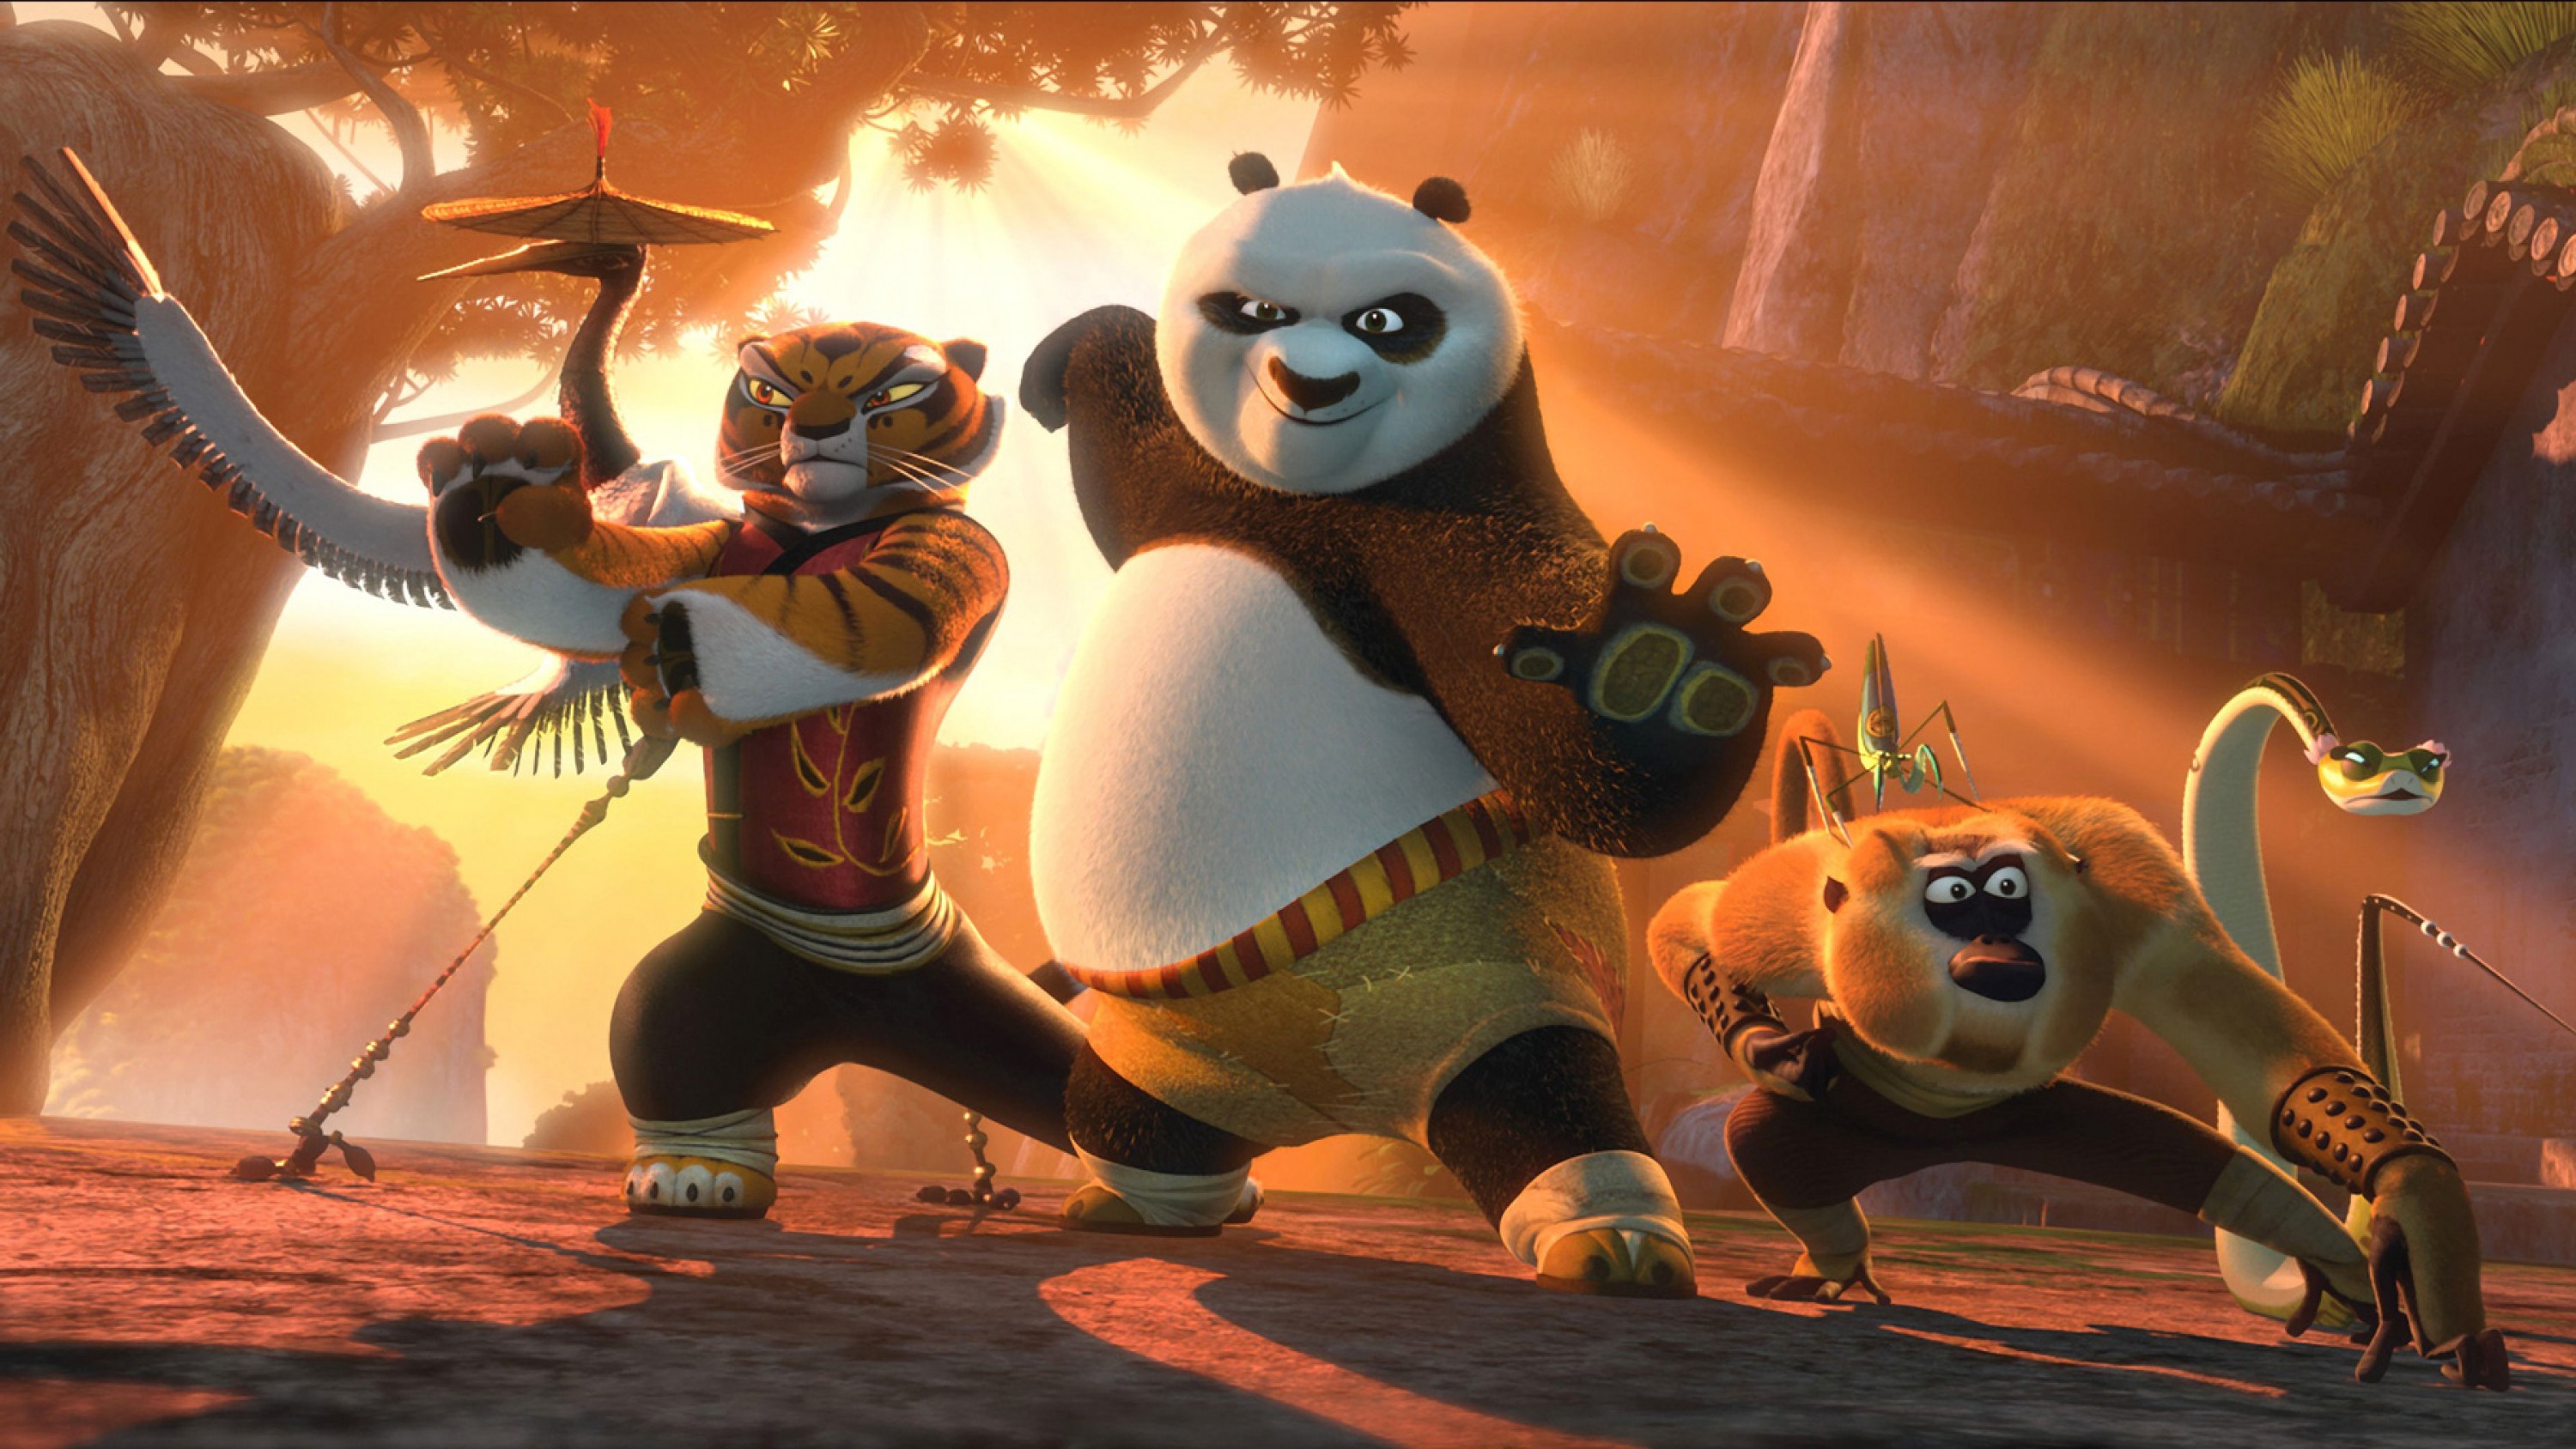 Resource - Kung Fu Panda 2: Film Guide - Into Film